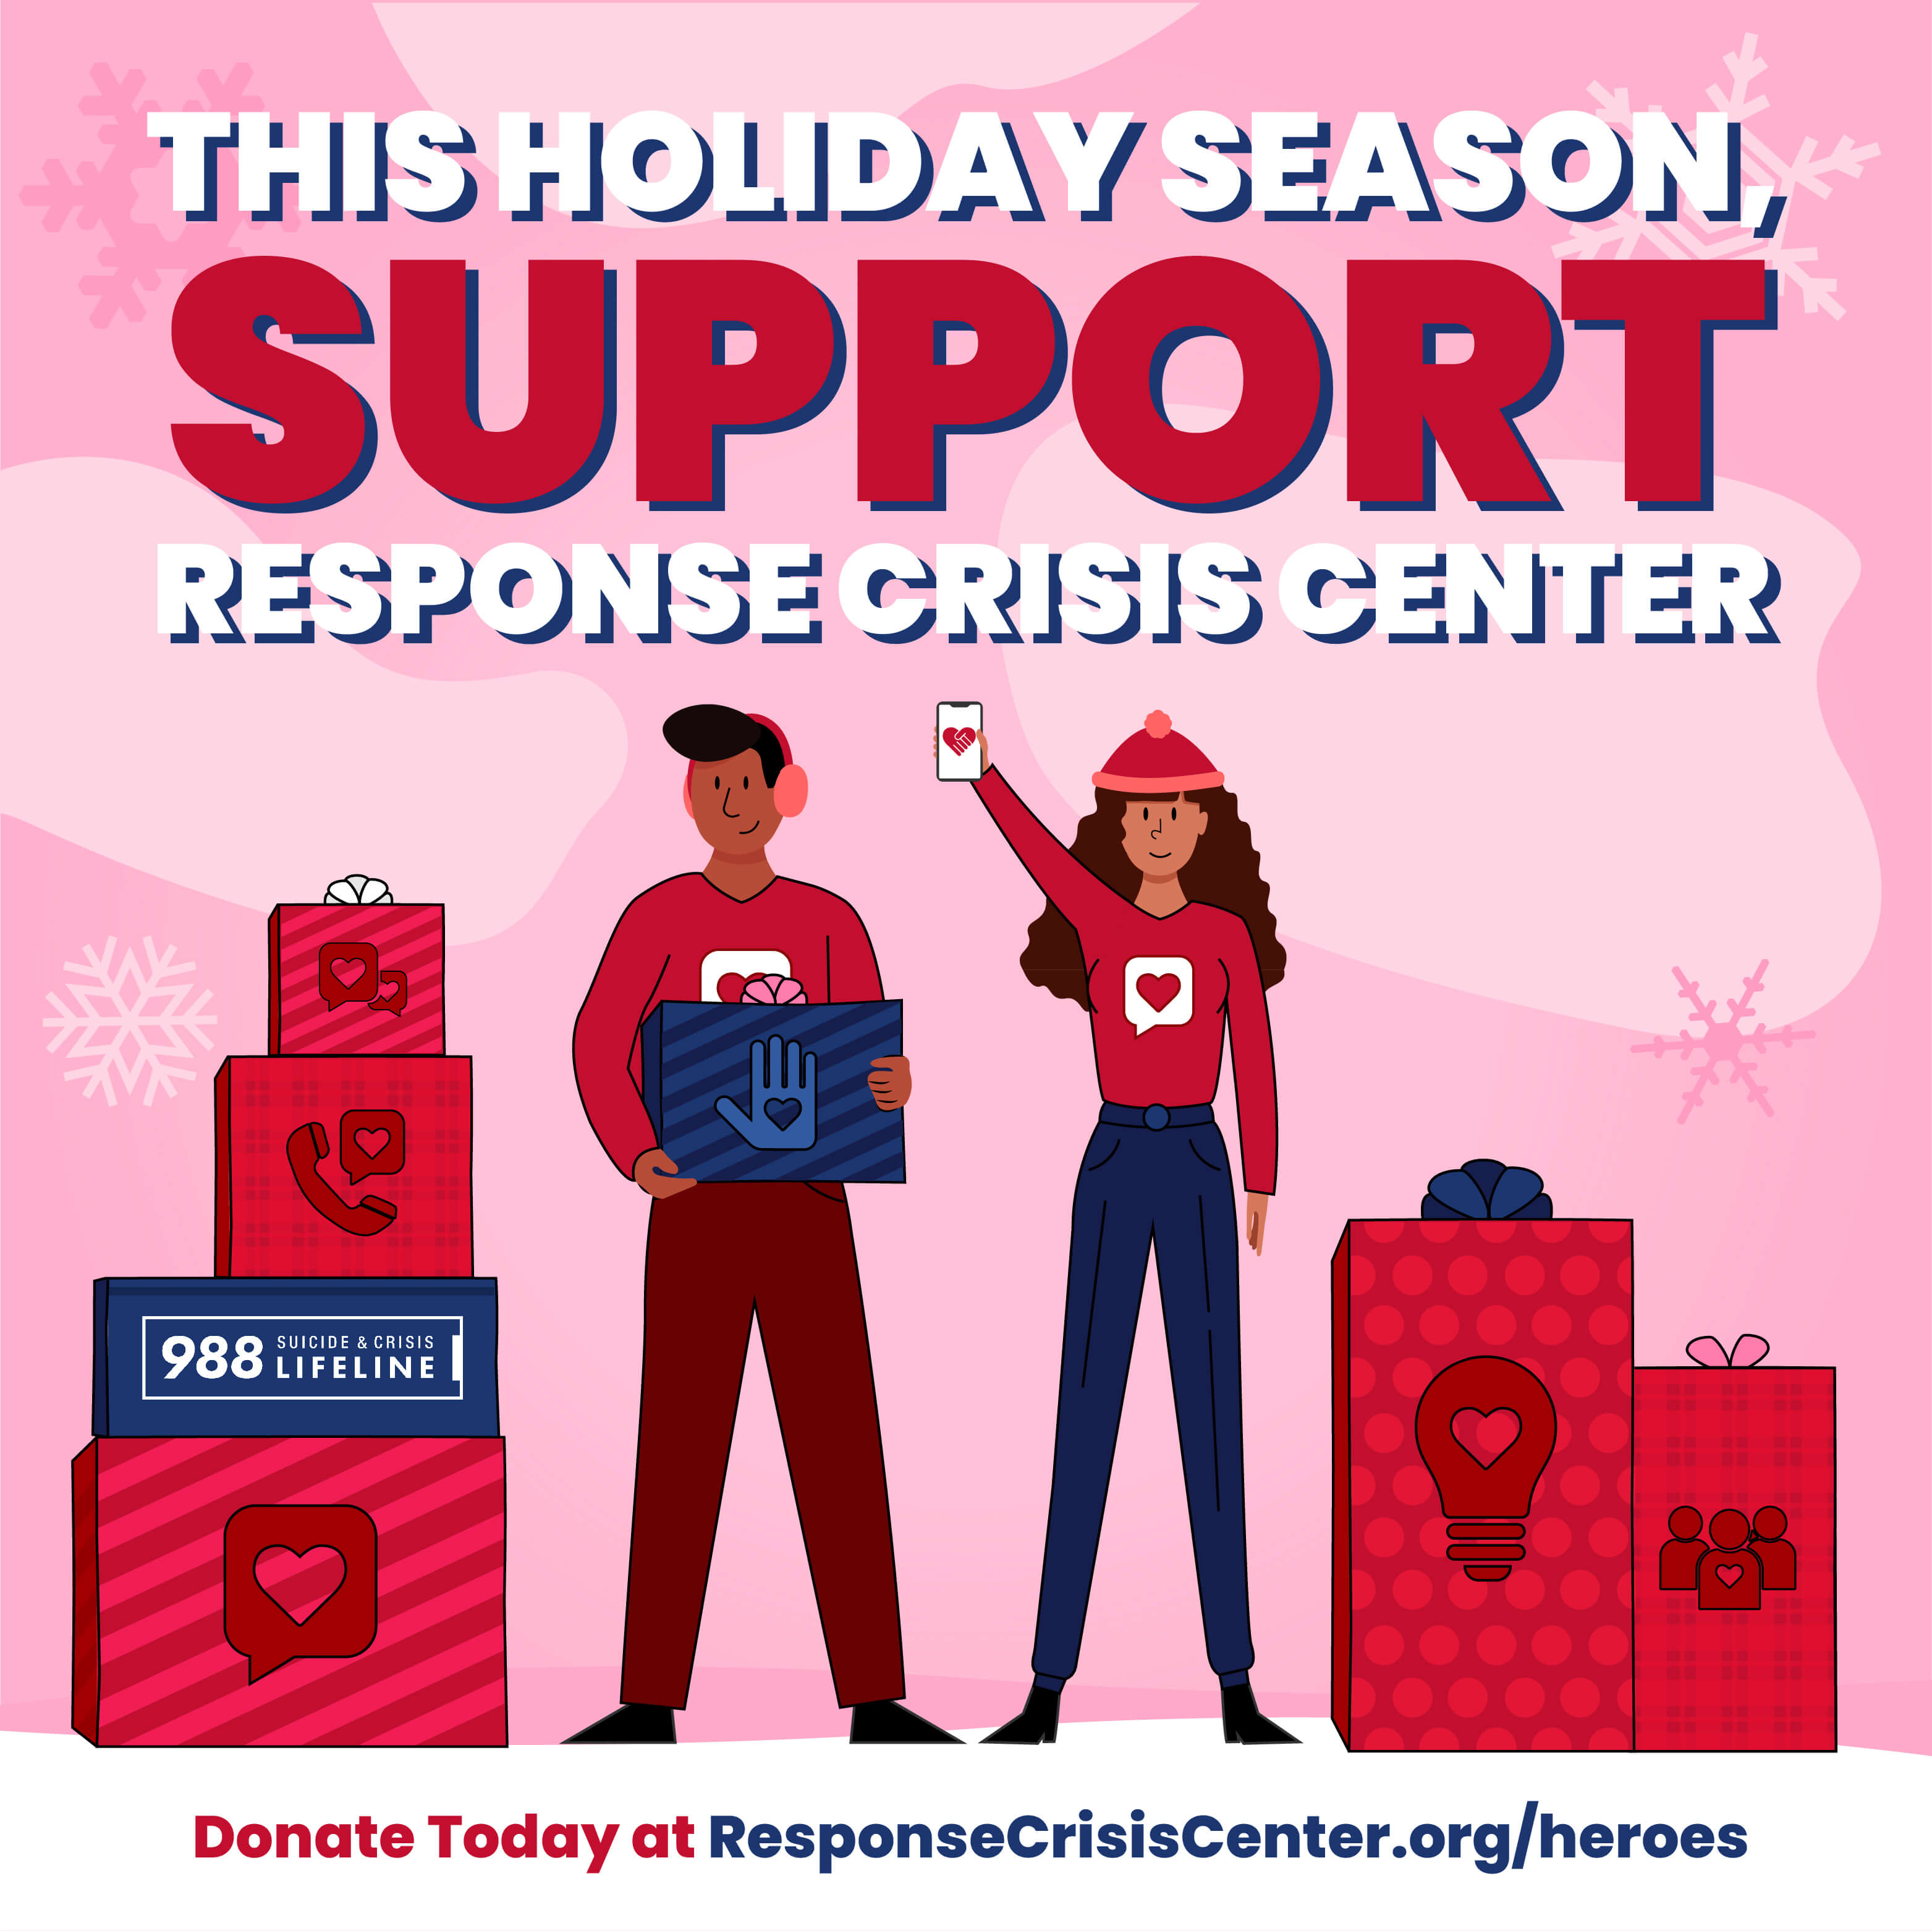 Support Response Crisis Center